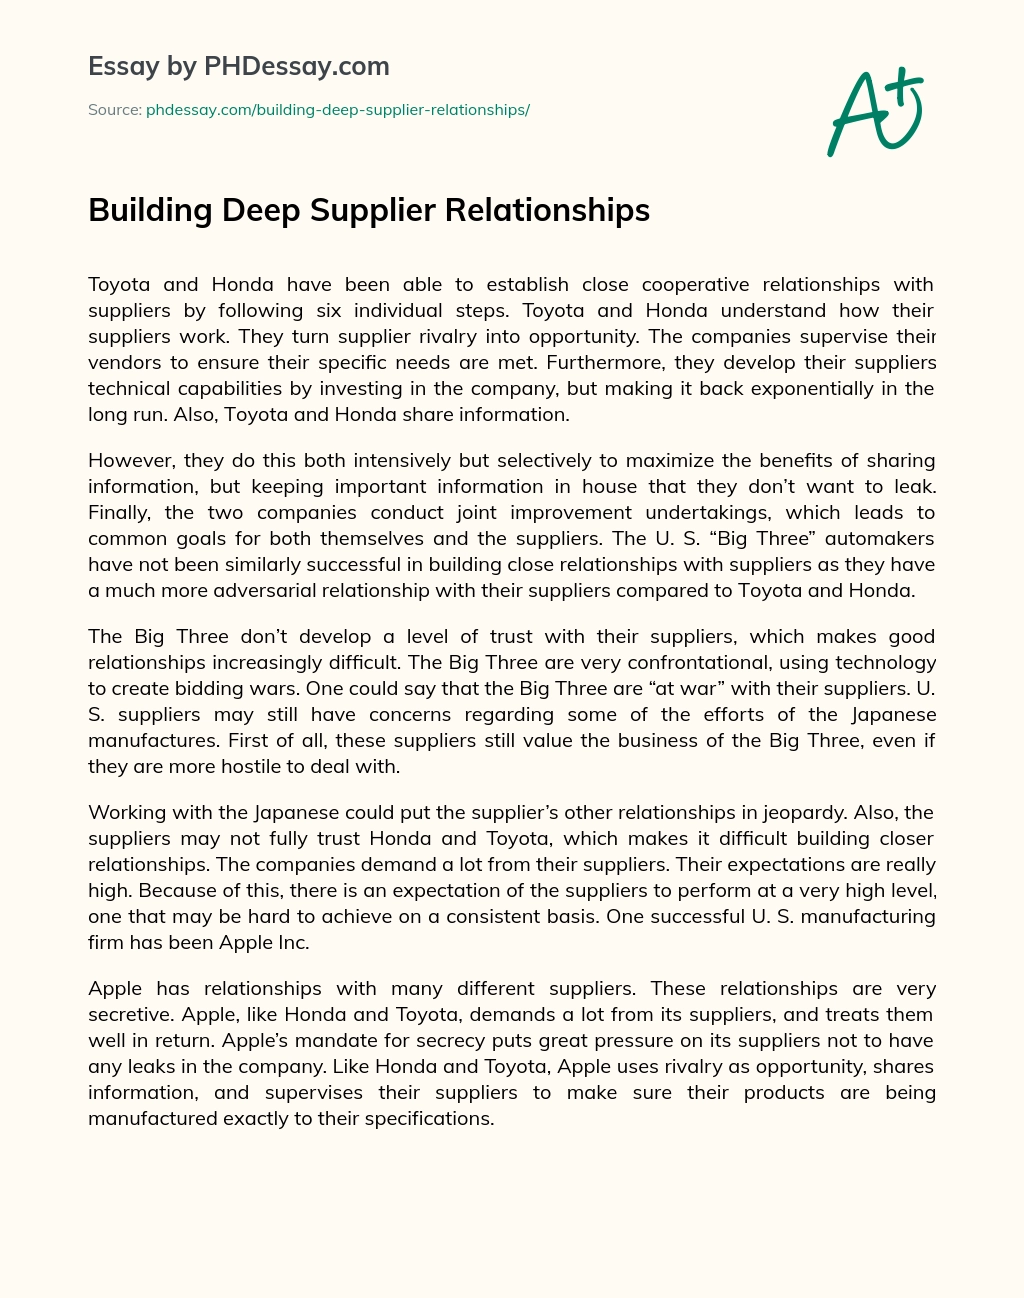 Building Deep Supplier Relationships essay